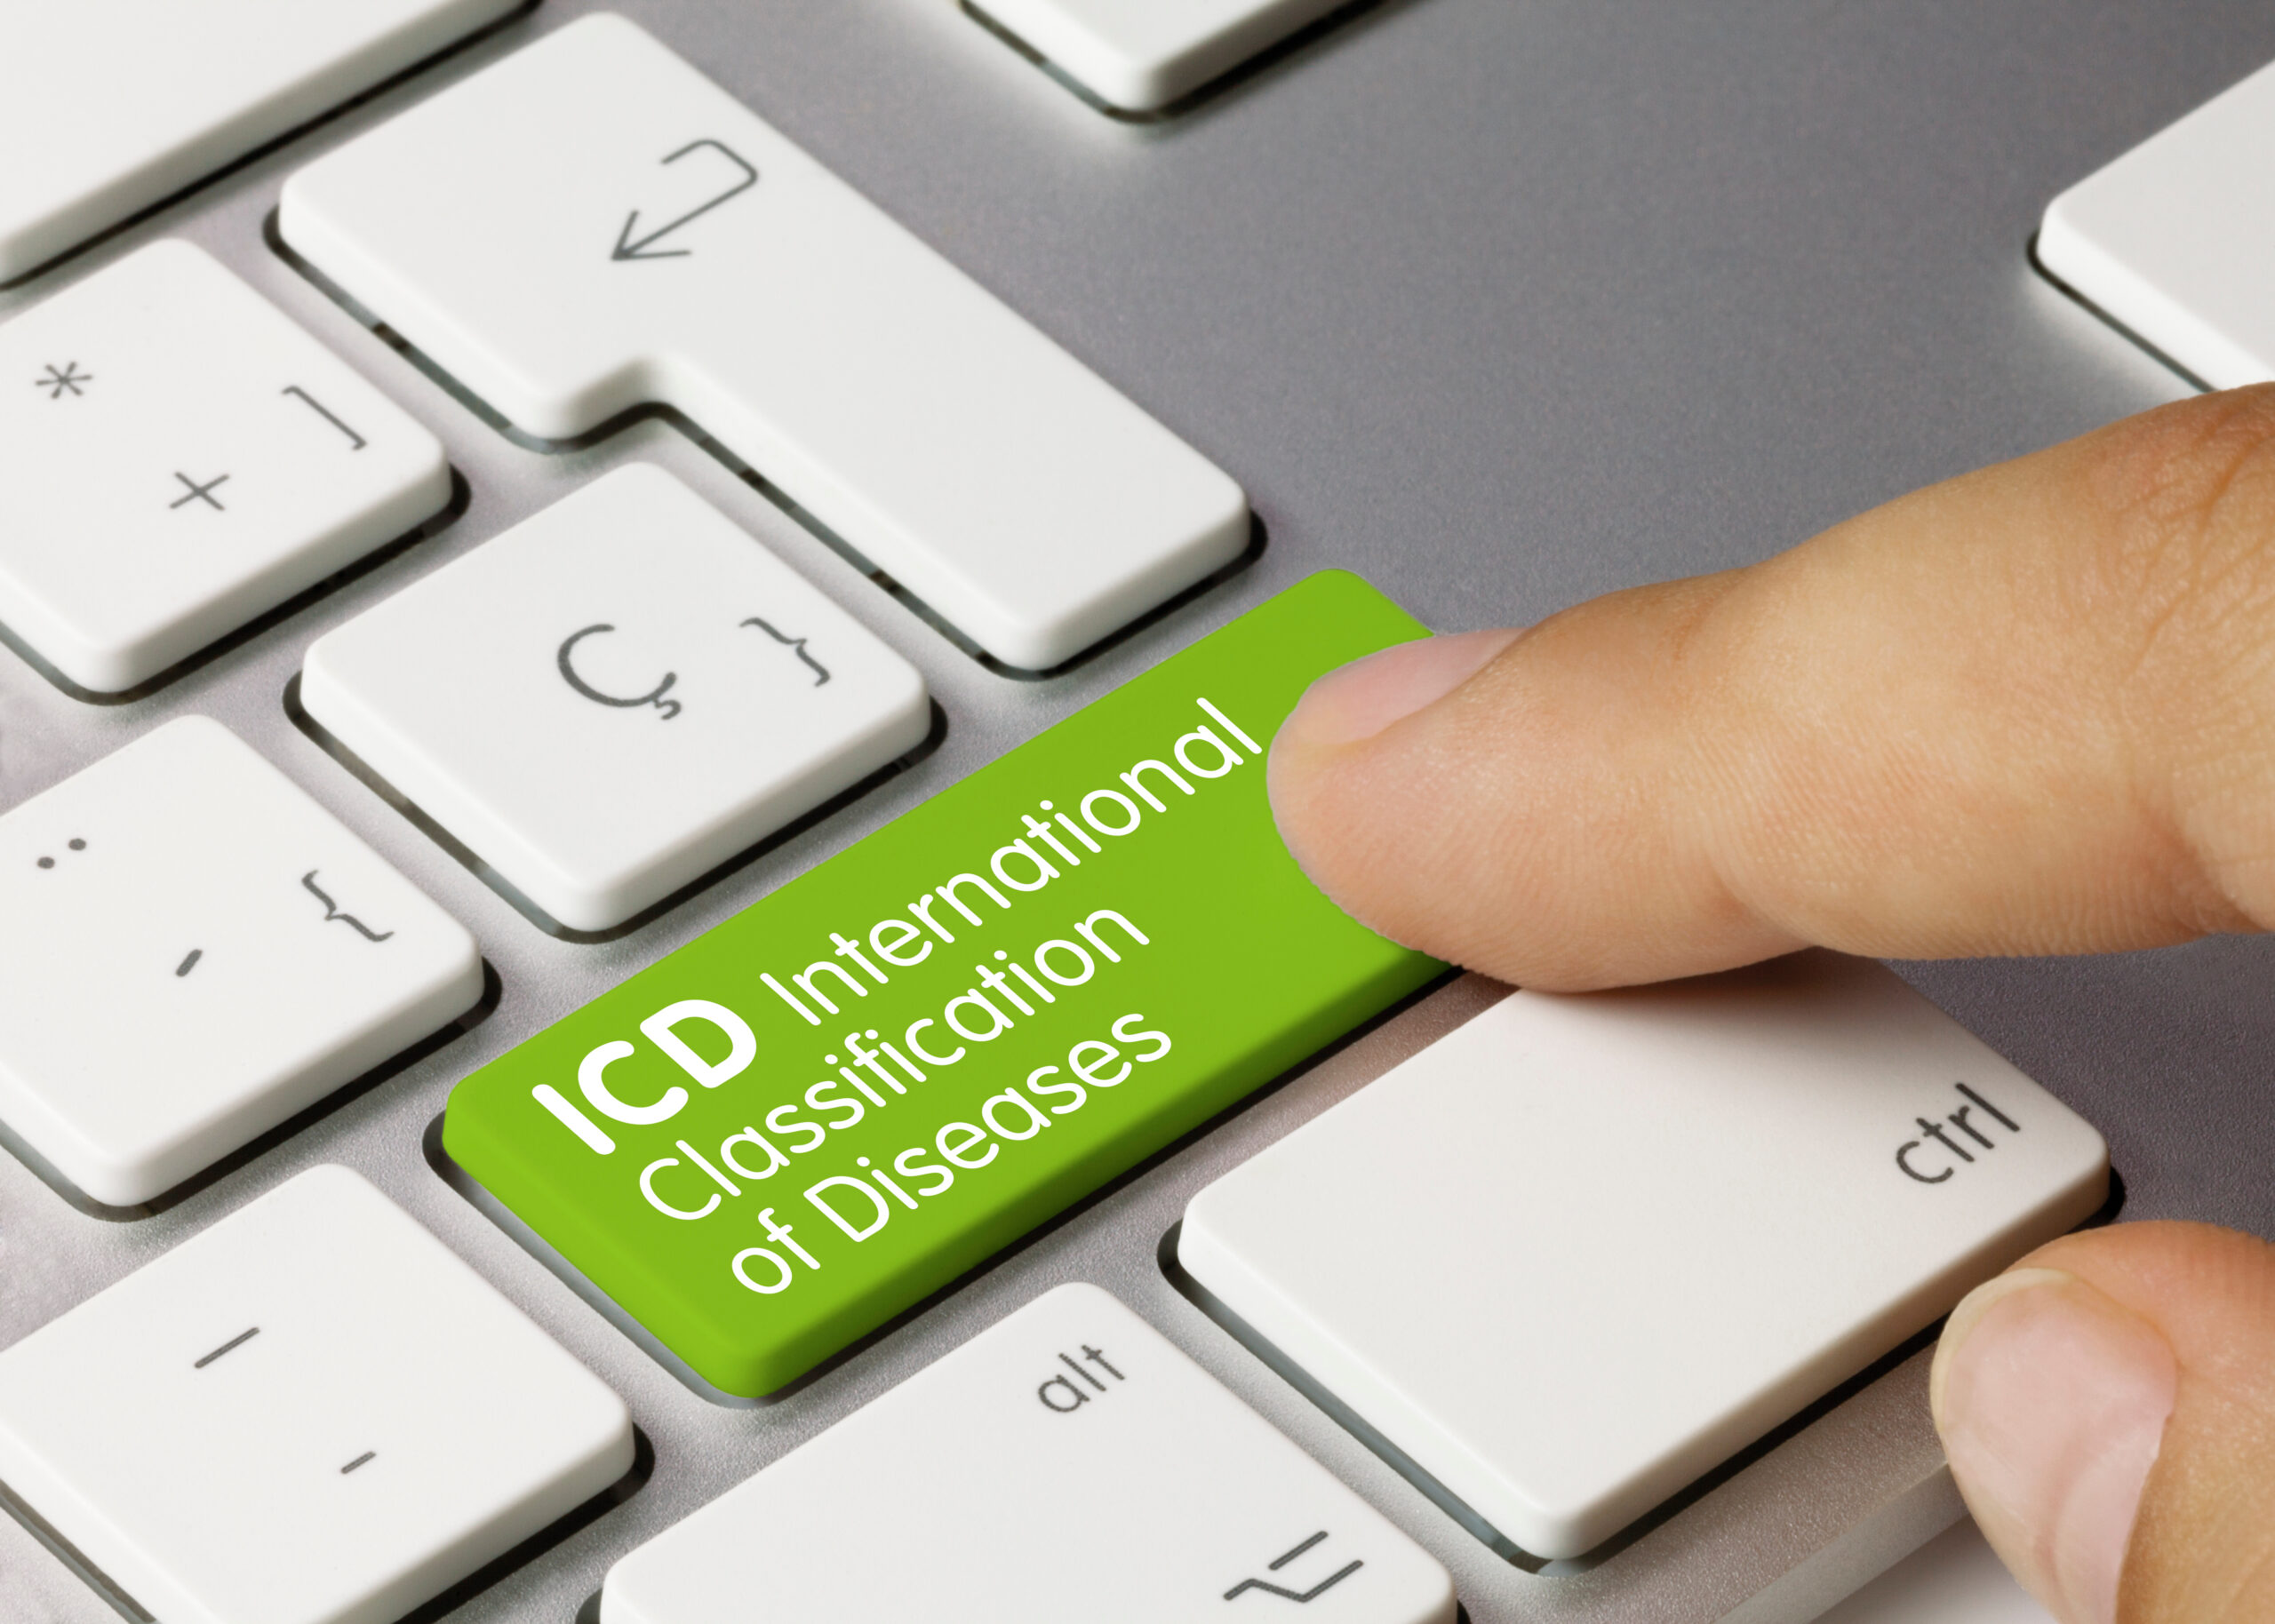 ICD International Classification of Diseases - Inscription on Green Keyboard Key